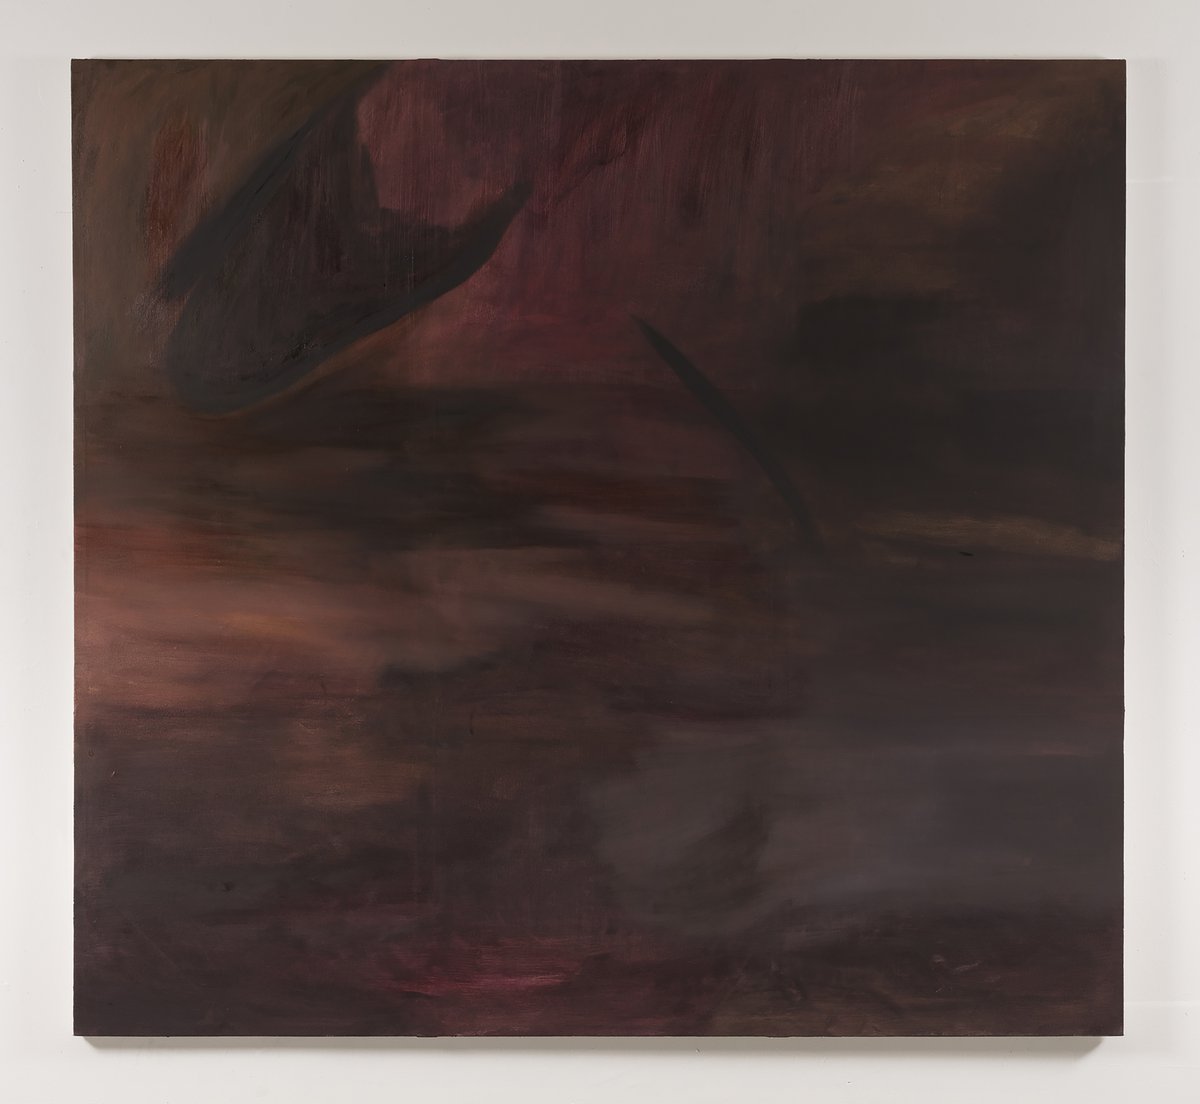 Dominique KnowlesYour Bones Breathe Warmth, 2017Oil on canvas198.1 x 213.3 cm